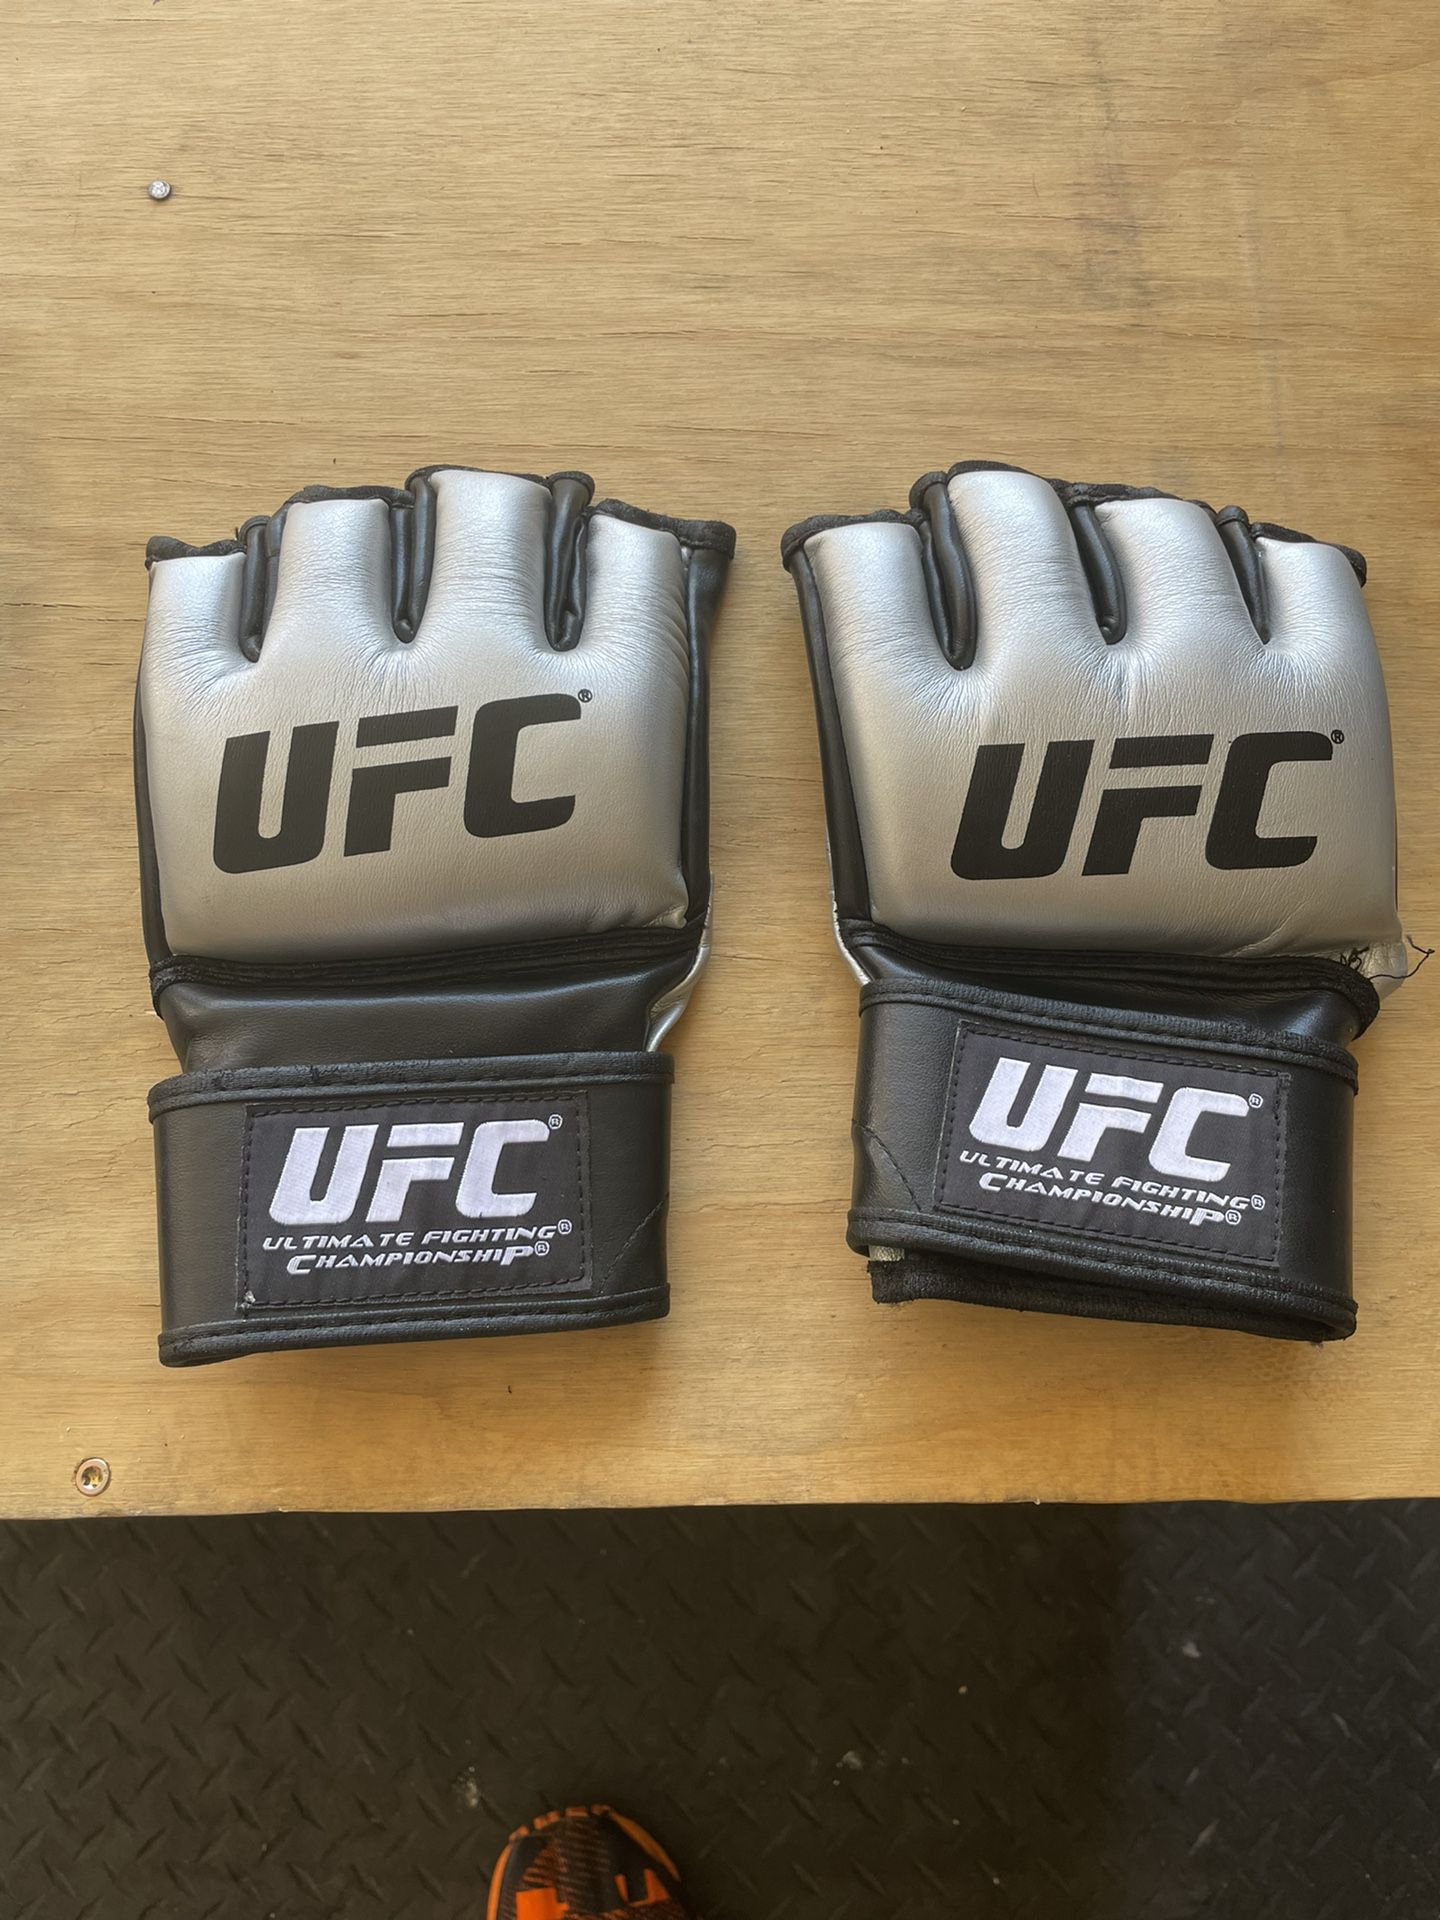 UFC MMA Gloves Xl 